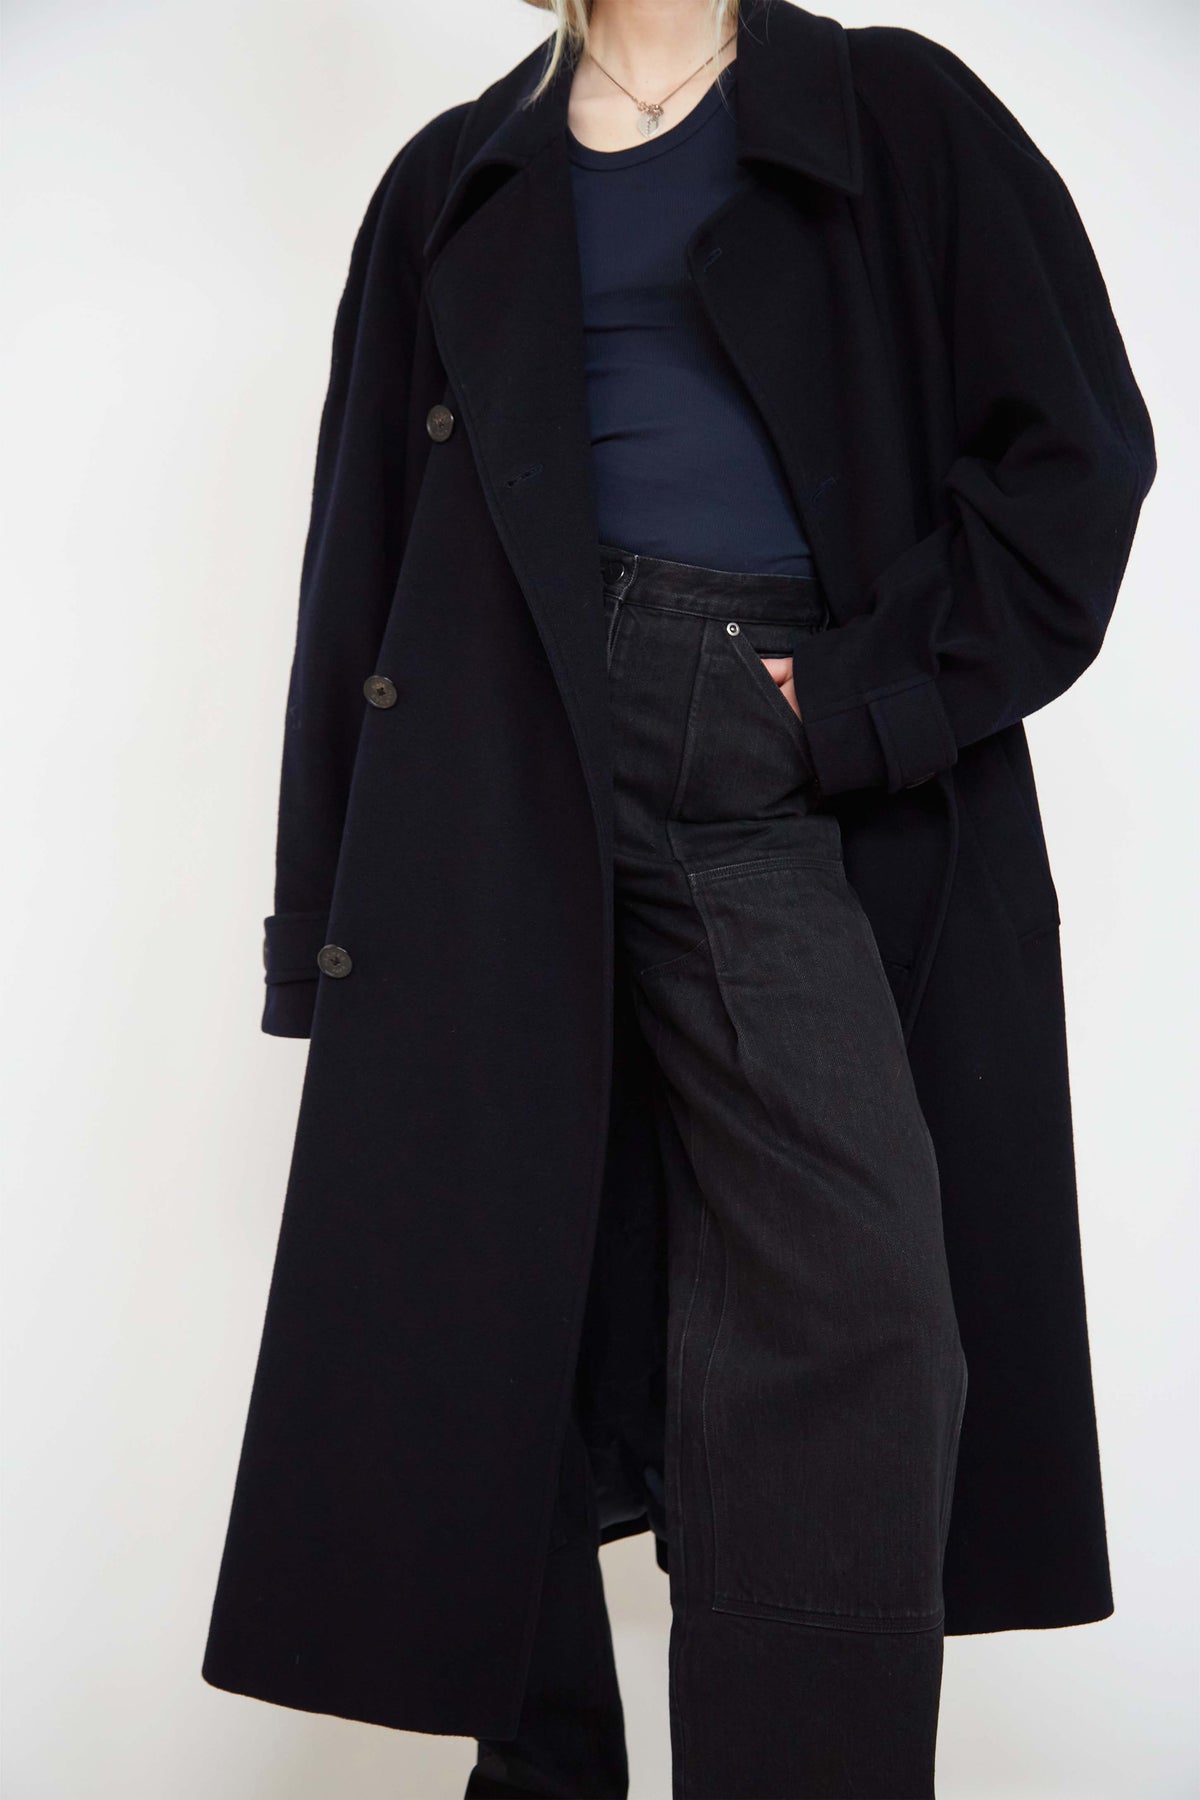 Hermes cashmere coat